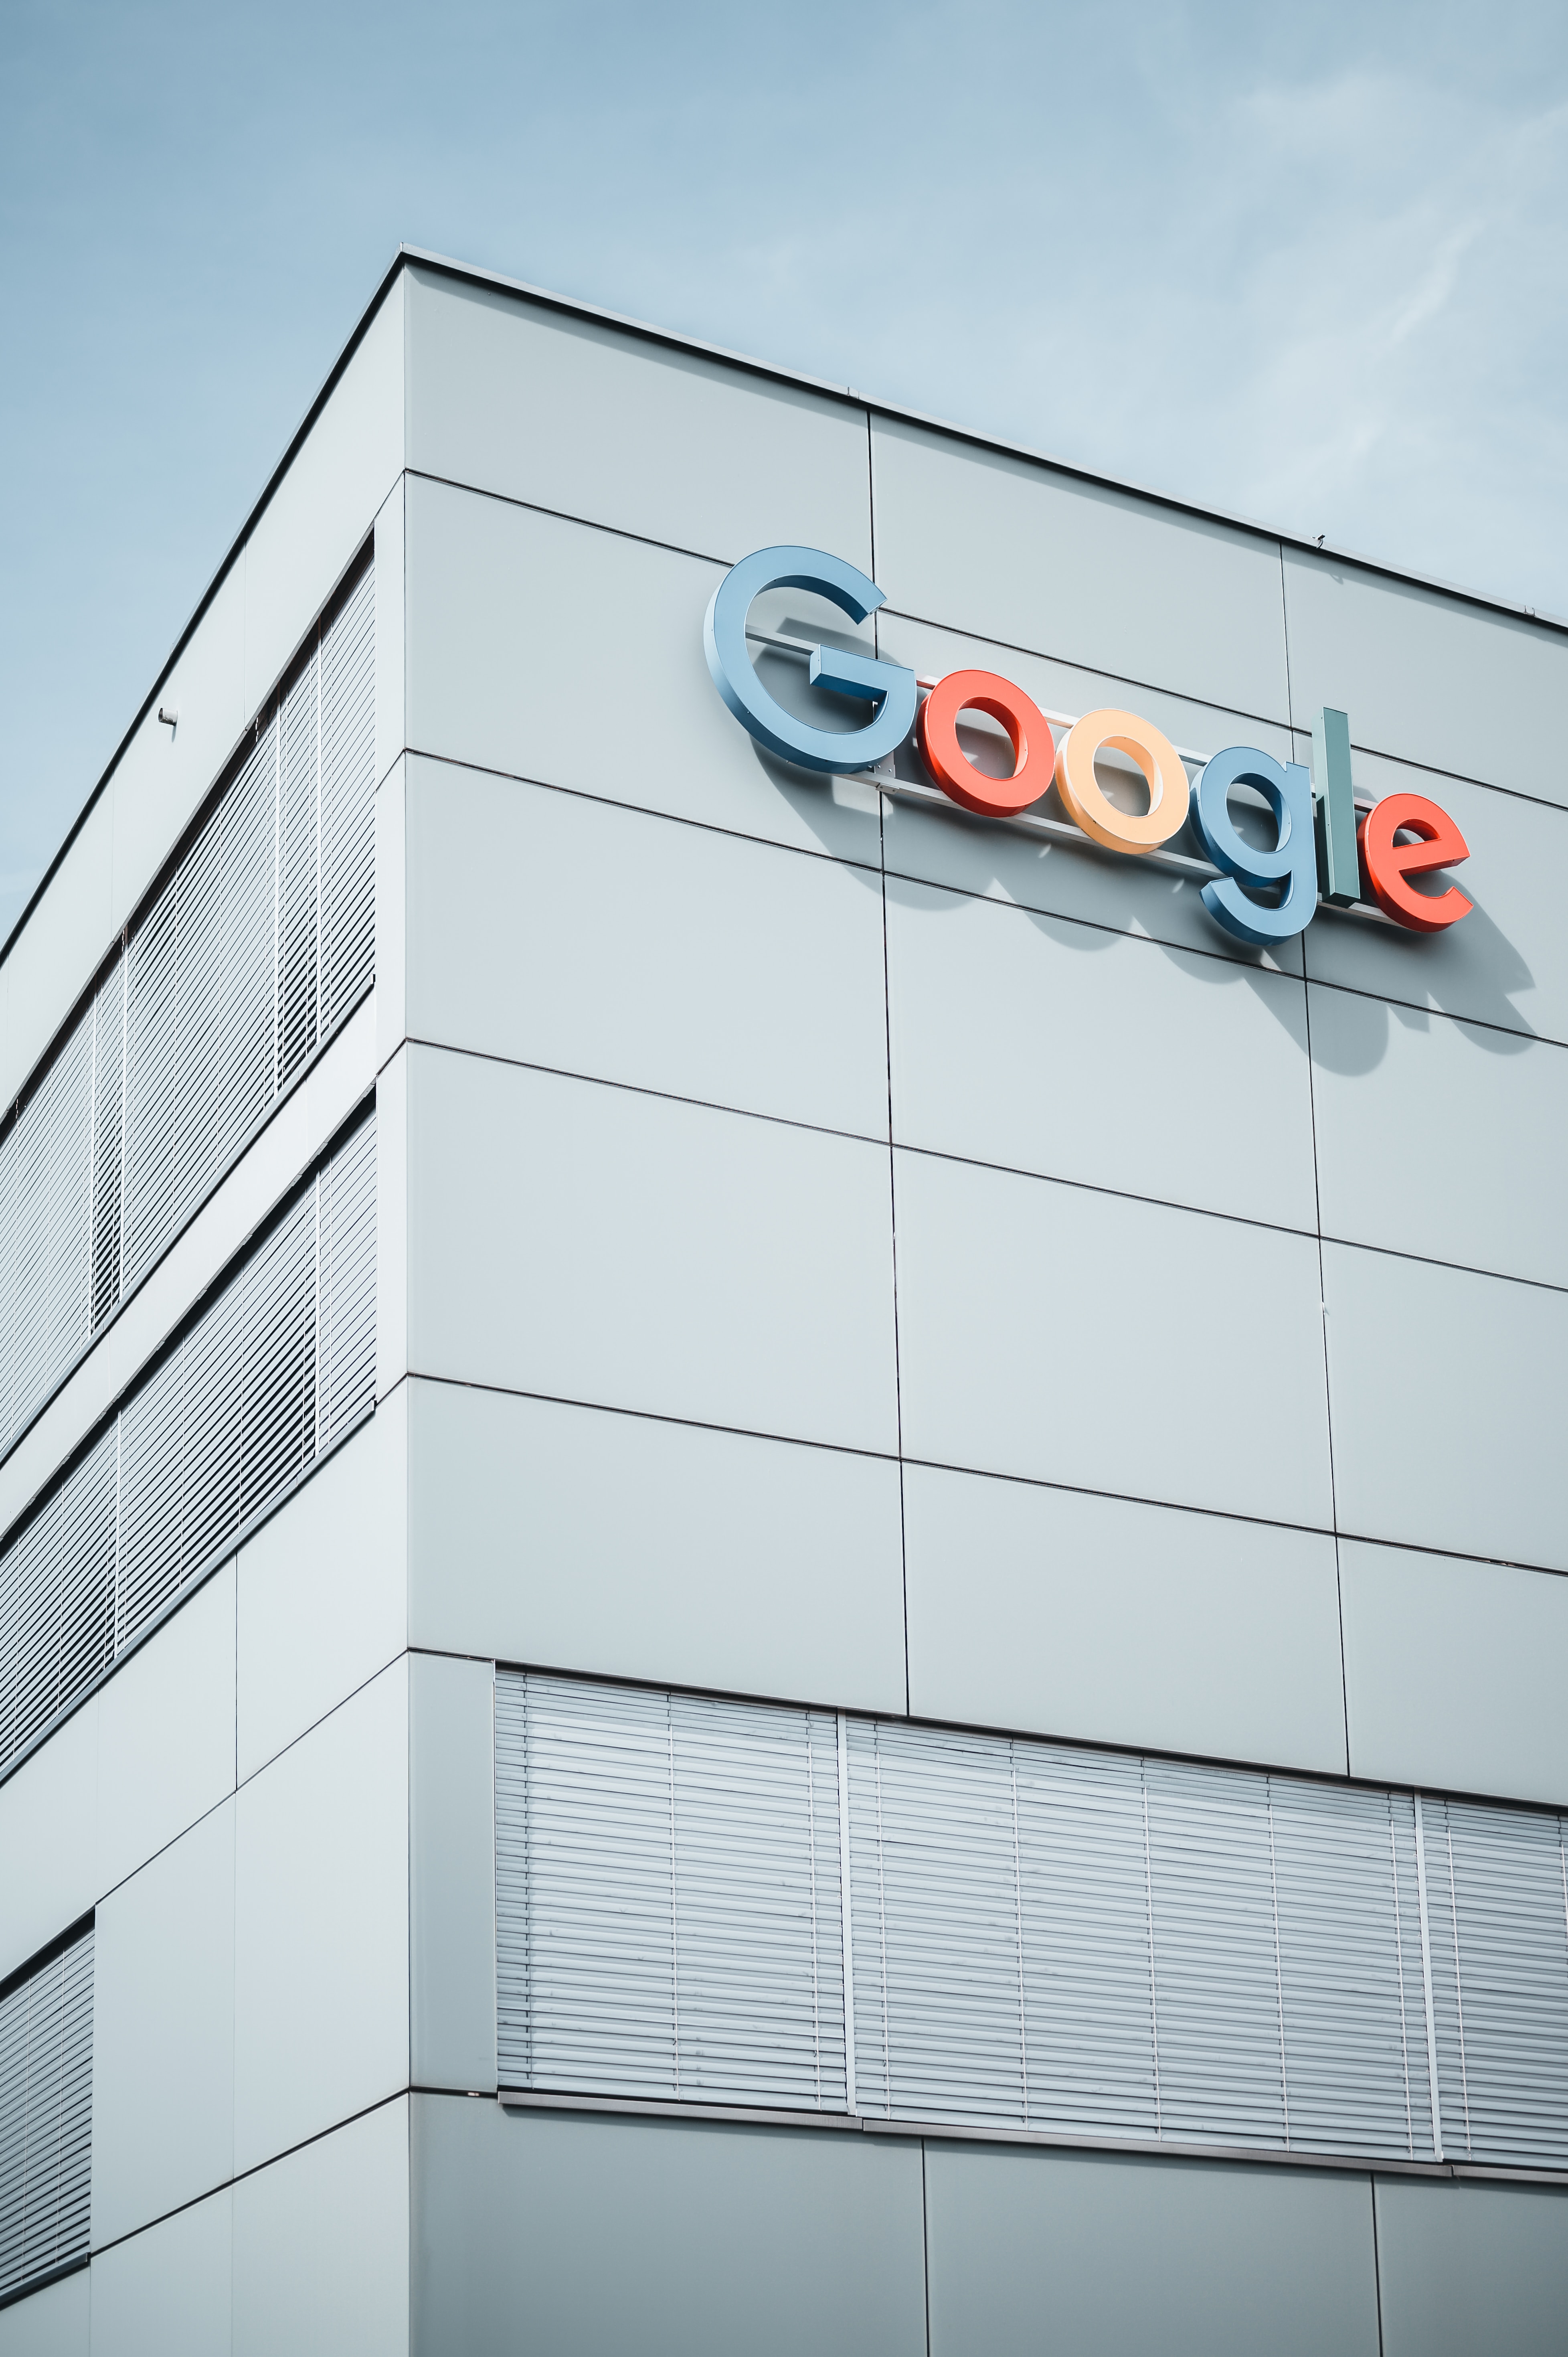 Battle of Titans: US Challenges Google in Unprecedented Antitrust Showdown